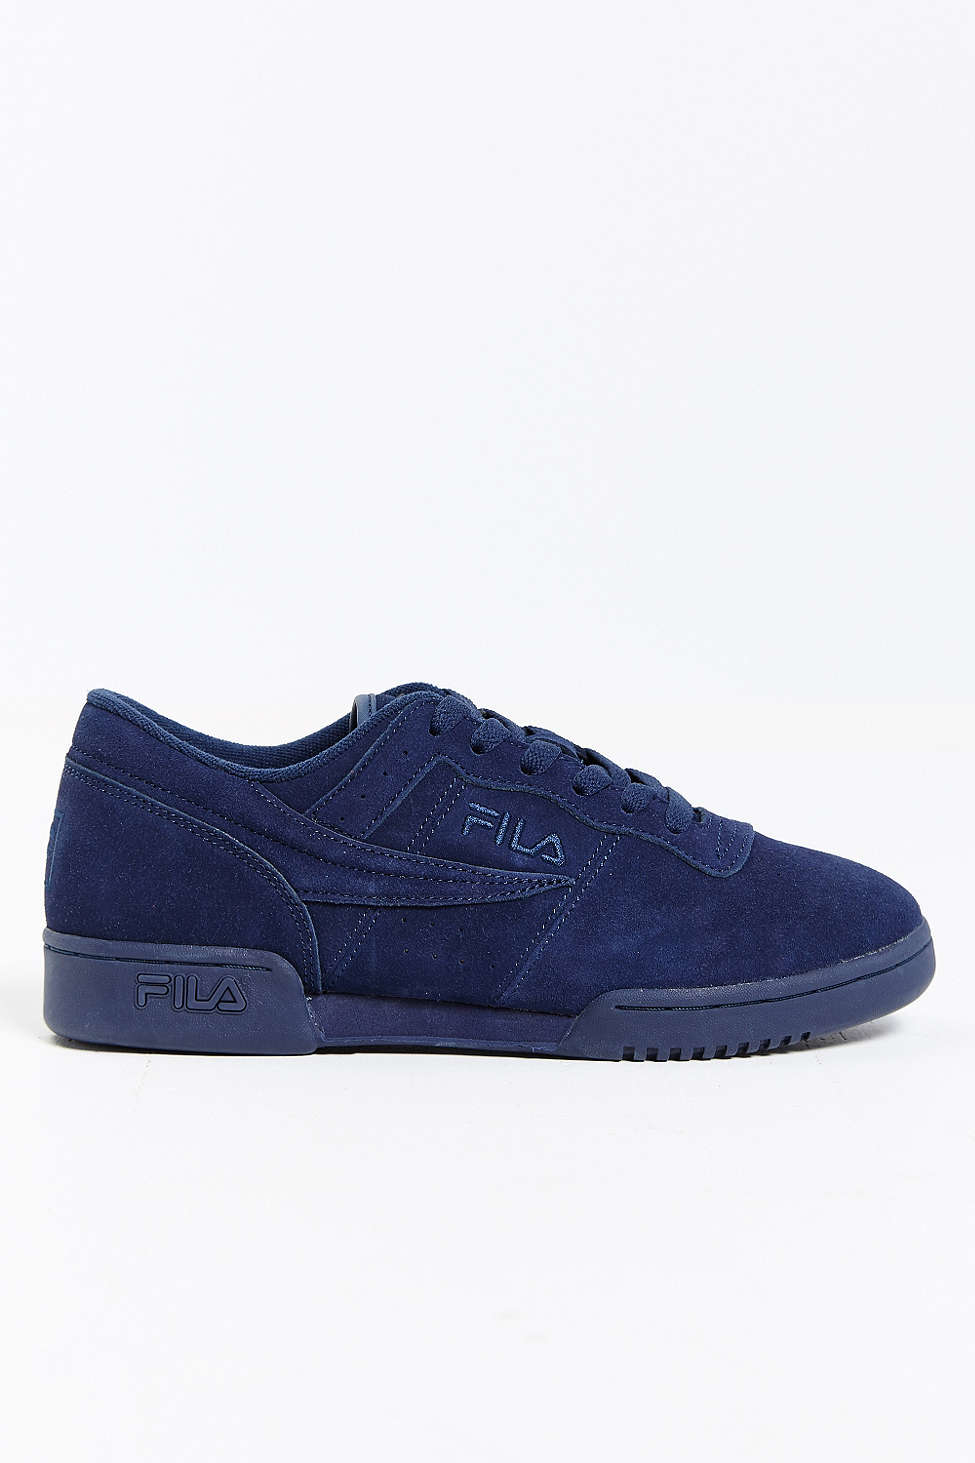 Fila Original Fitness Suede Sneaker in Navy (Blue) for Men - Lyst